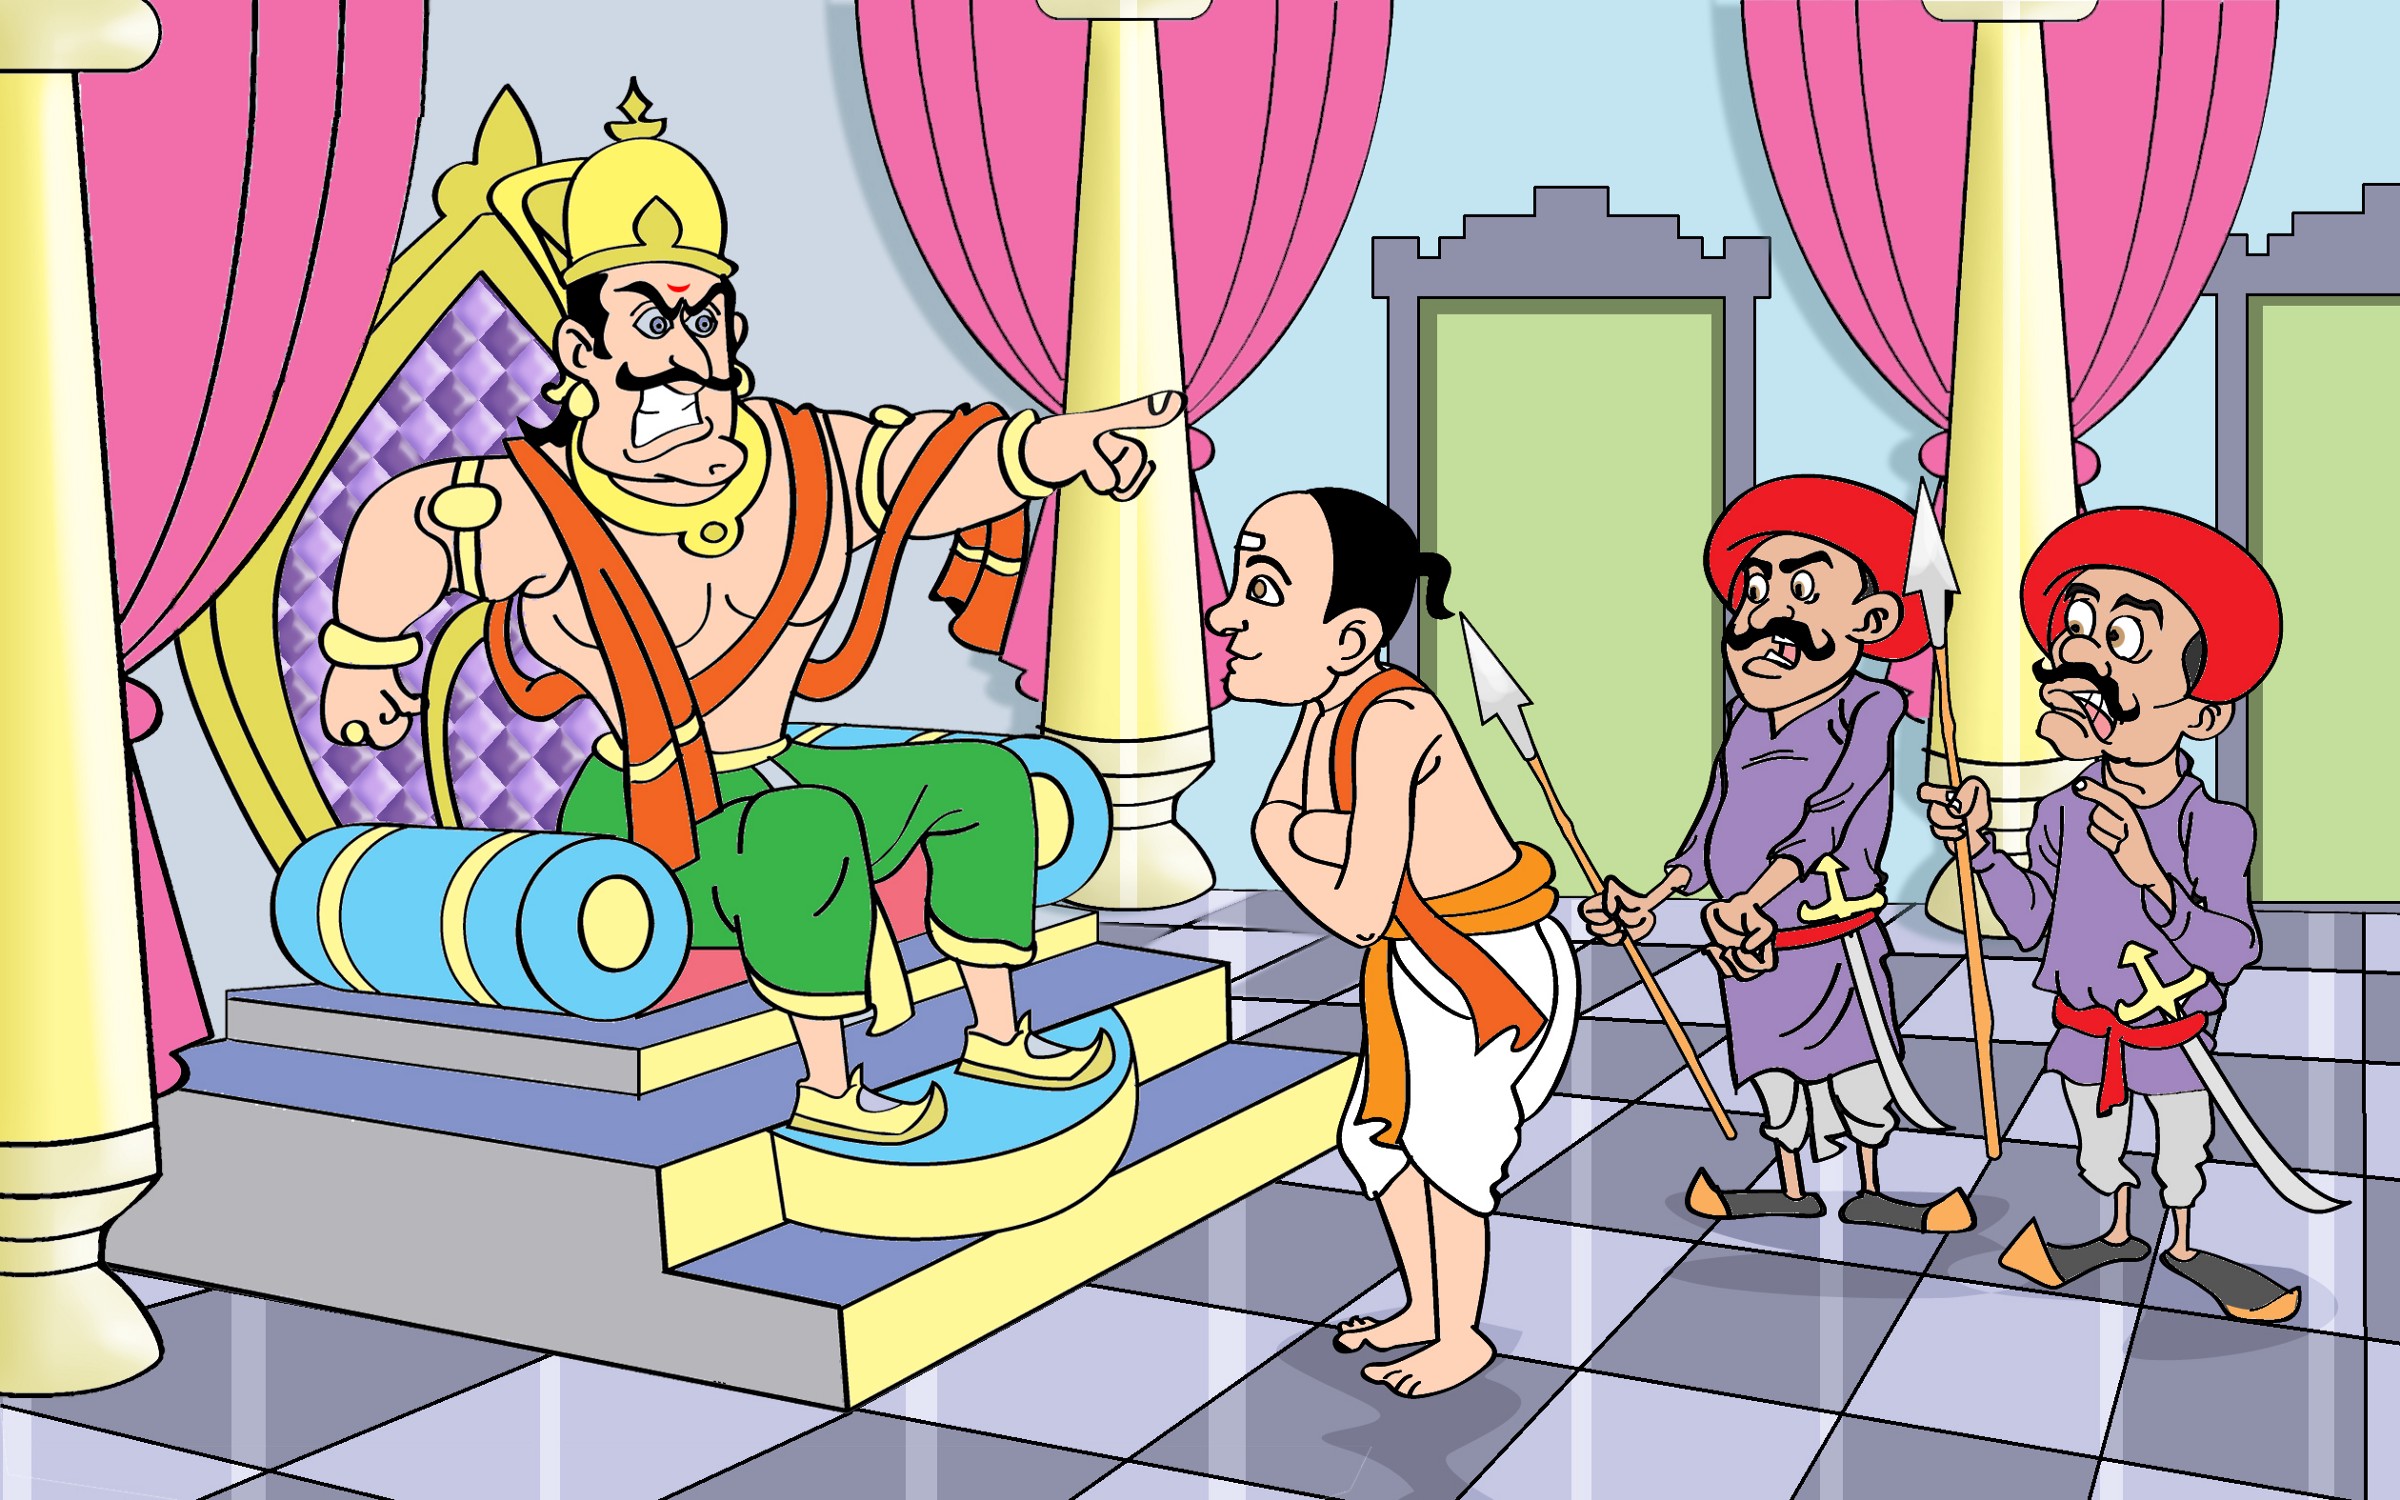 tenali raman king Vijayanagara